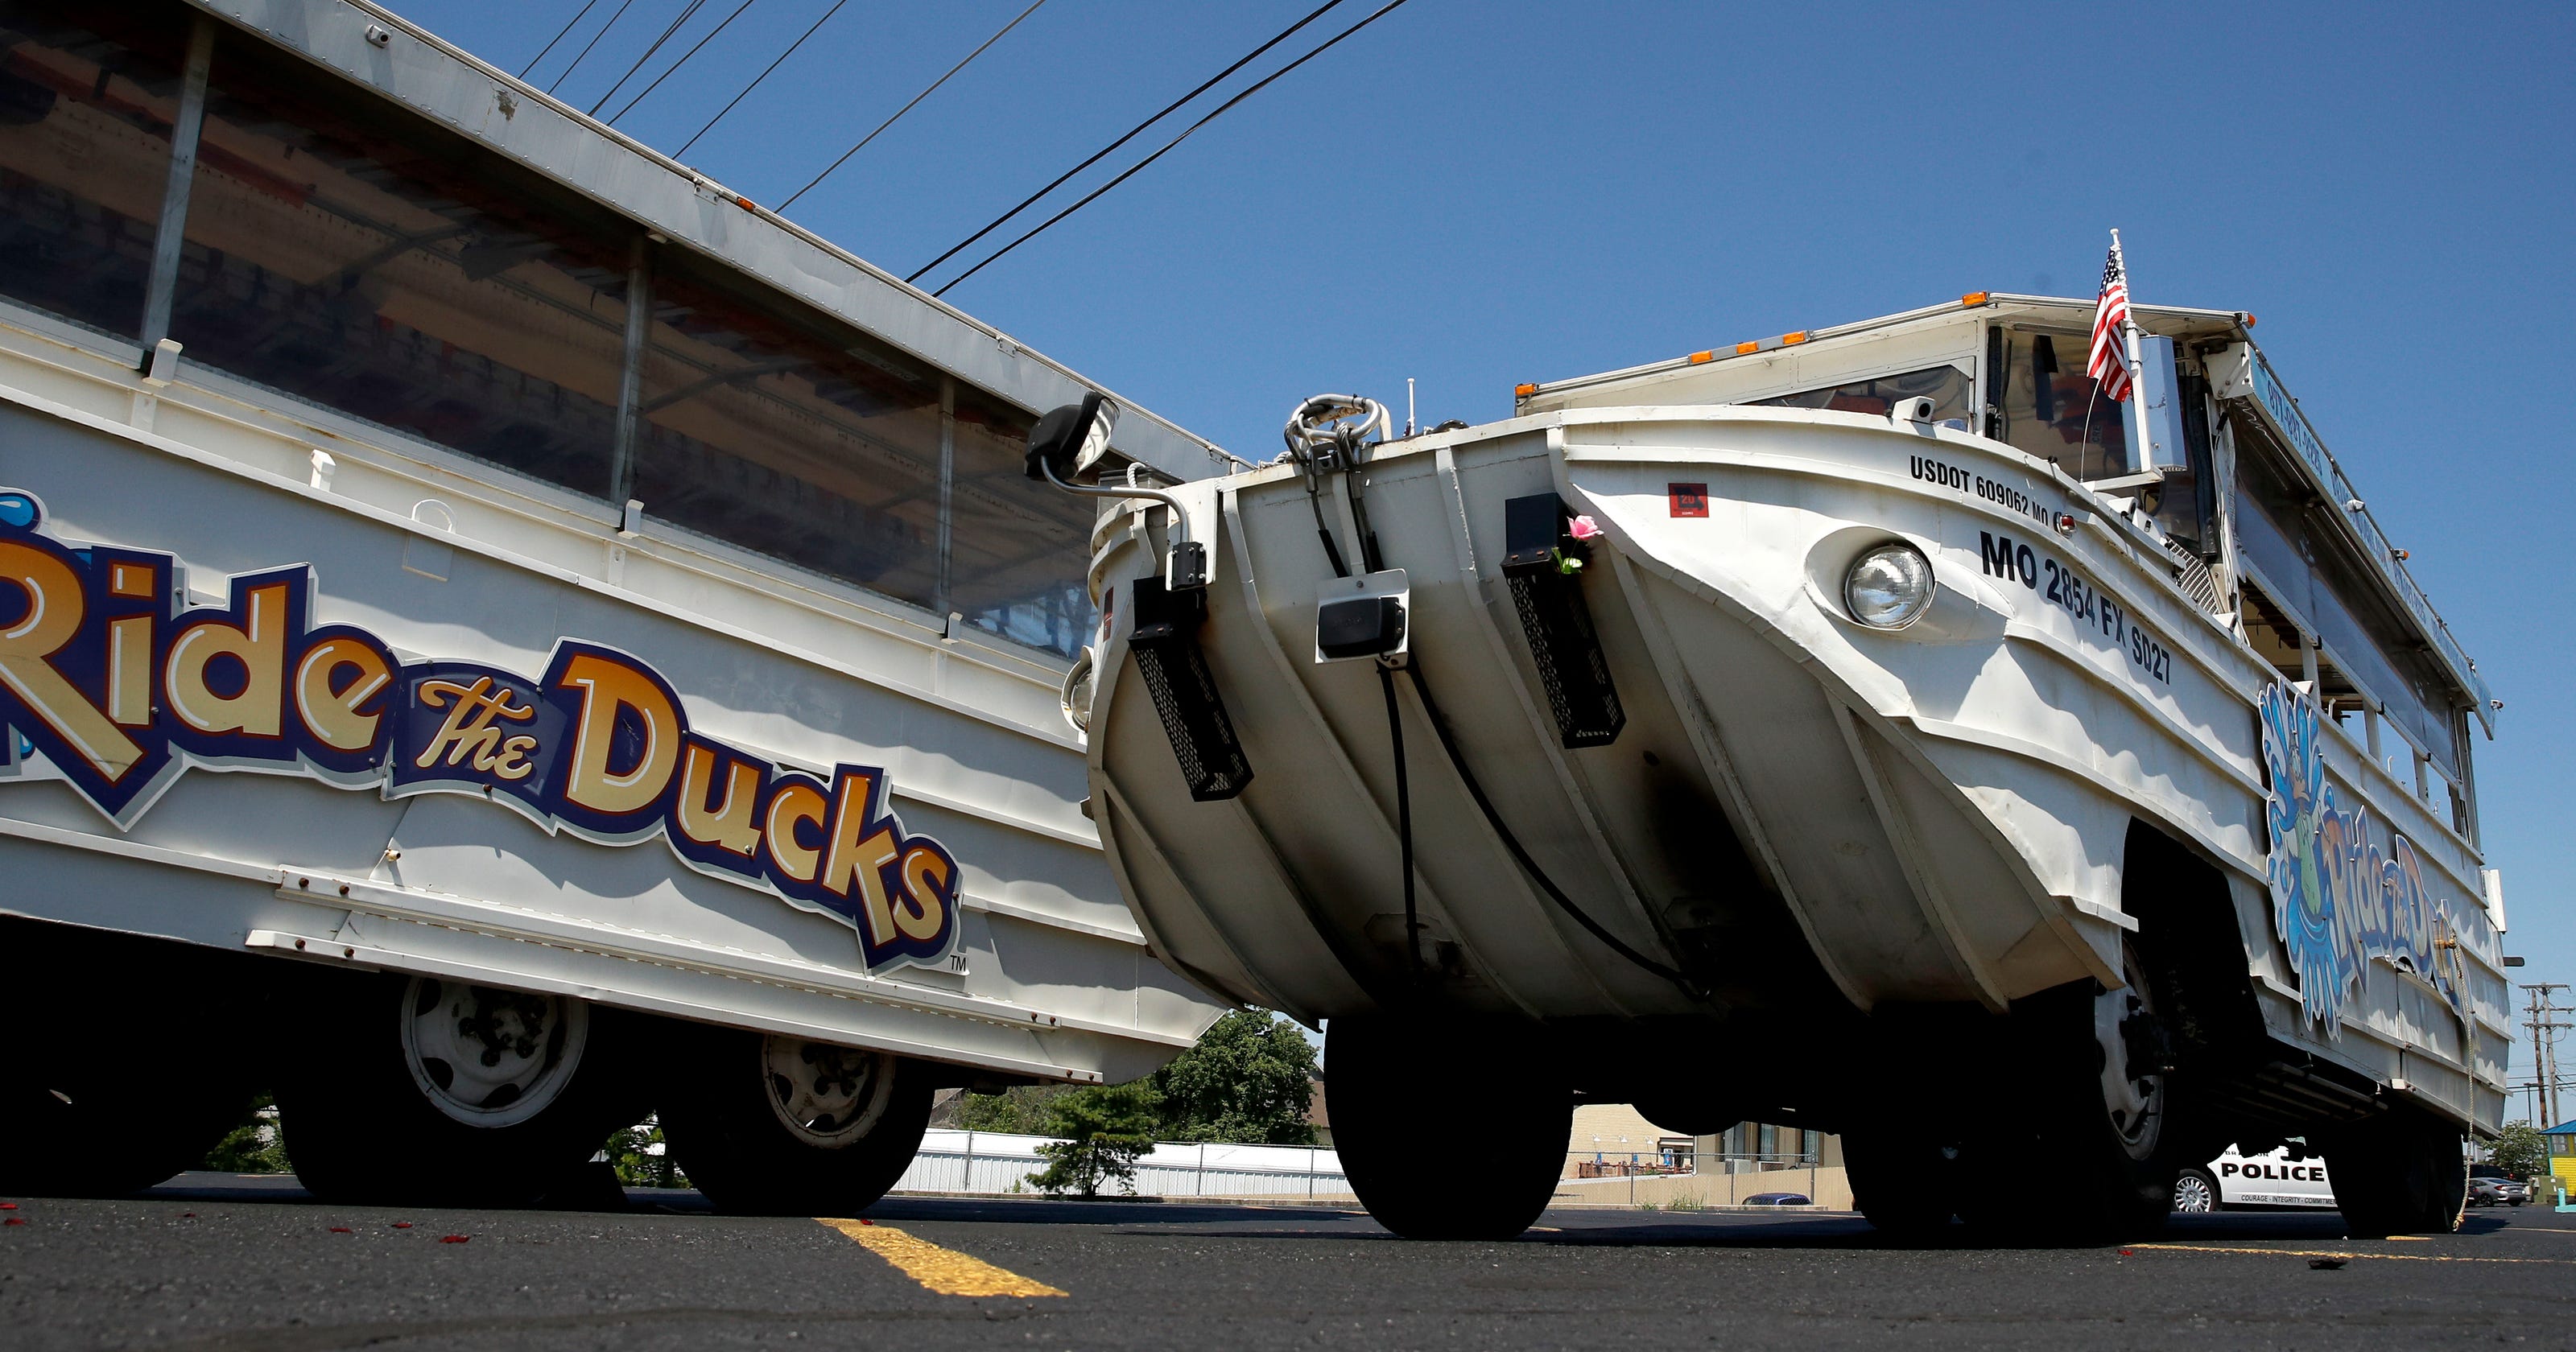 Branson duck boat tragedy: Ban tours, ex-NTSB chairman says